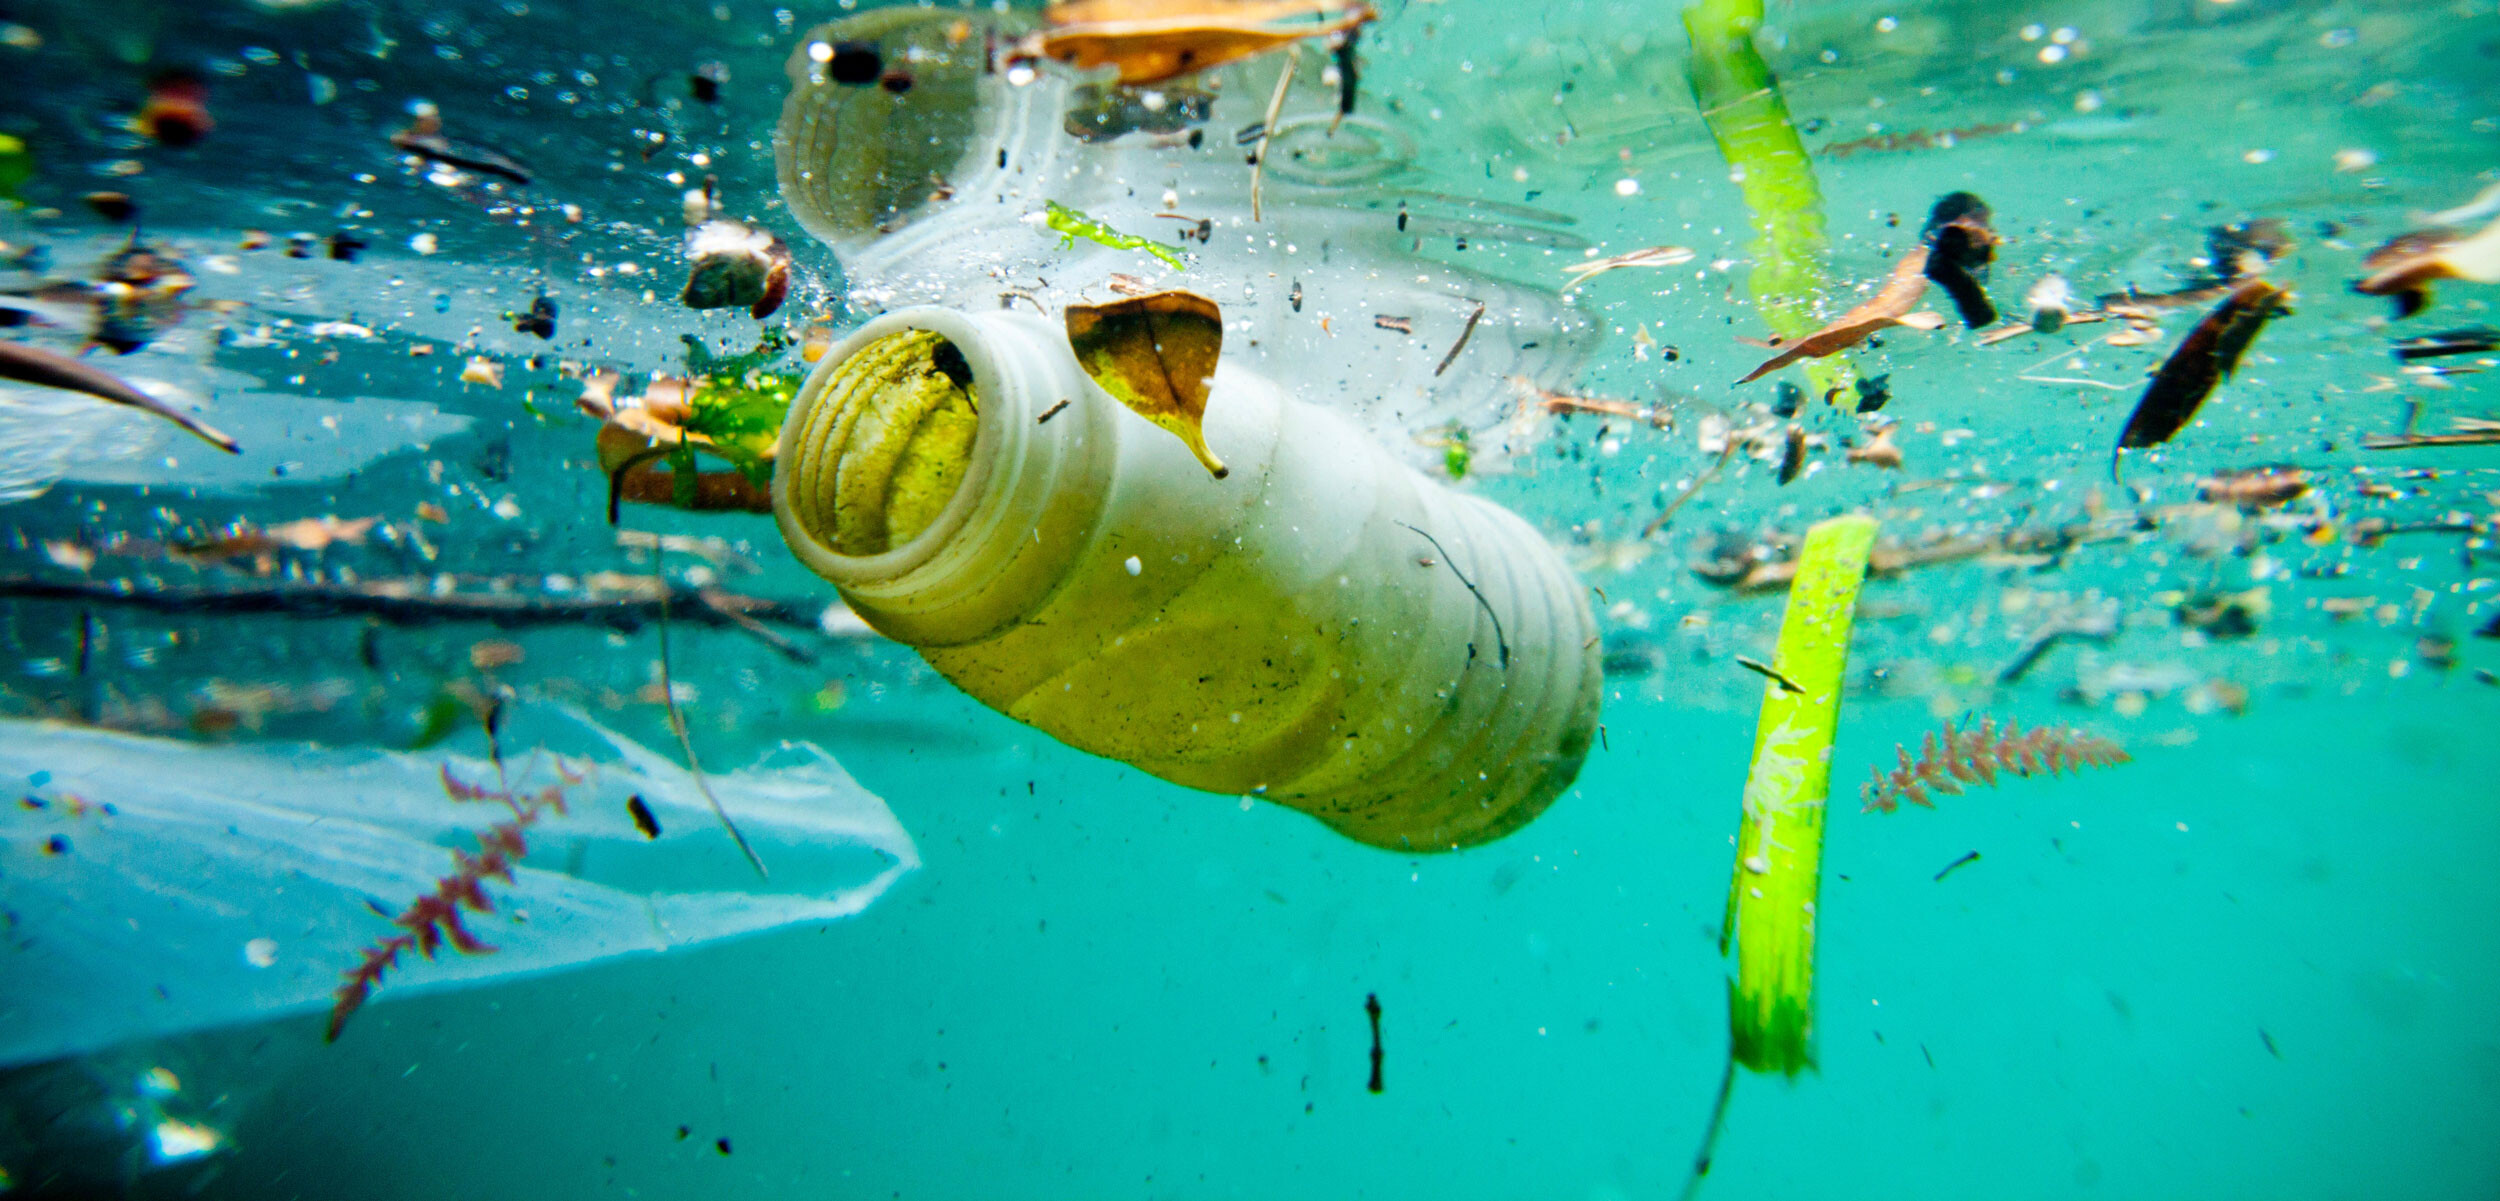 More information about "Περίπου 3.760 τόνοι πλαστικών πλέουν σήμερα στη Μεσόγειο"